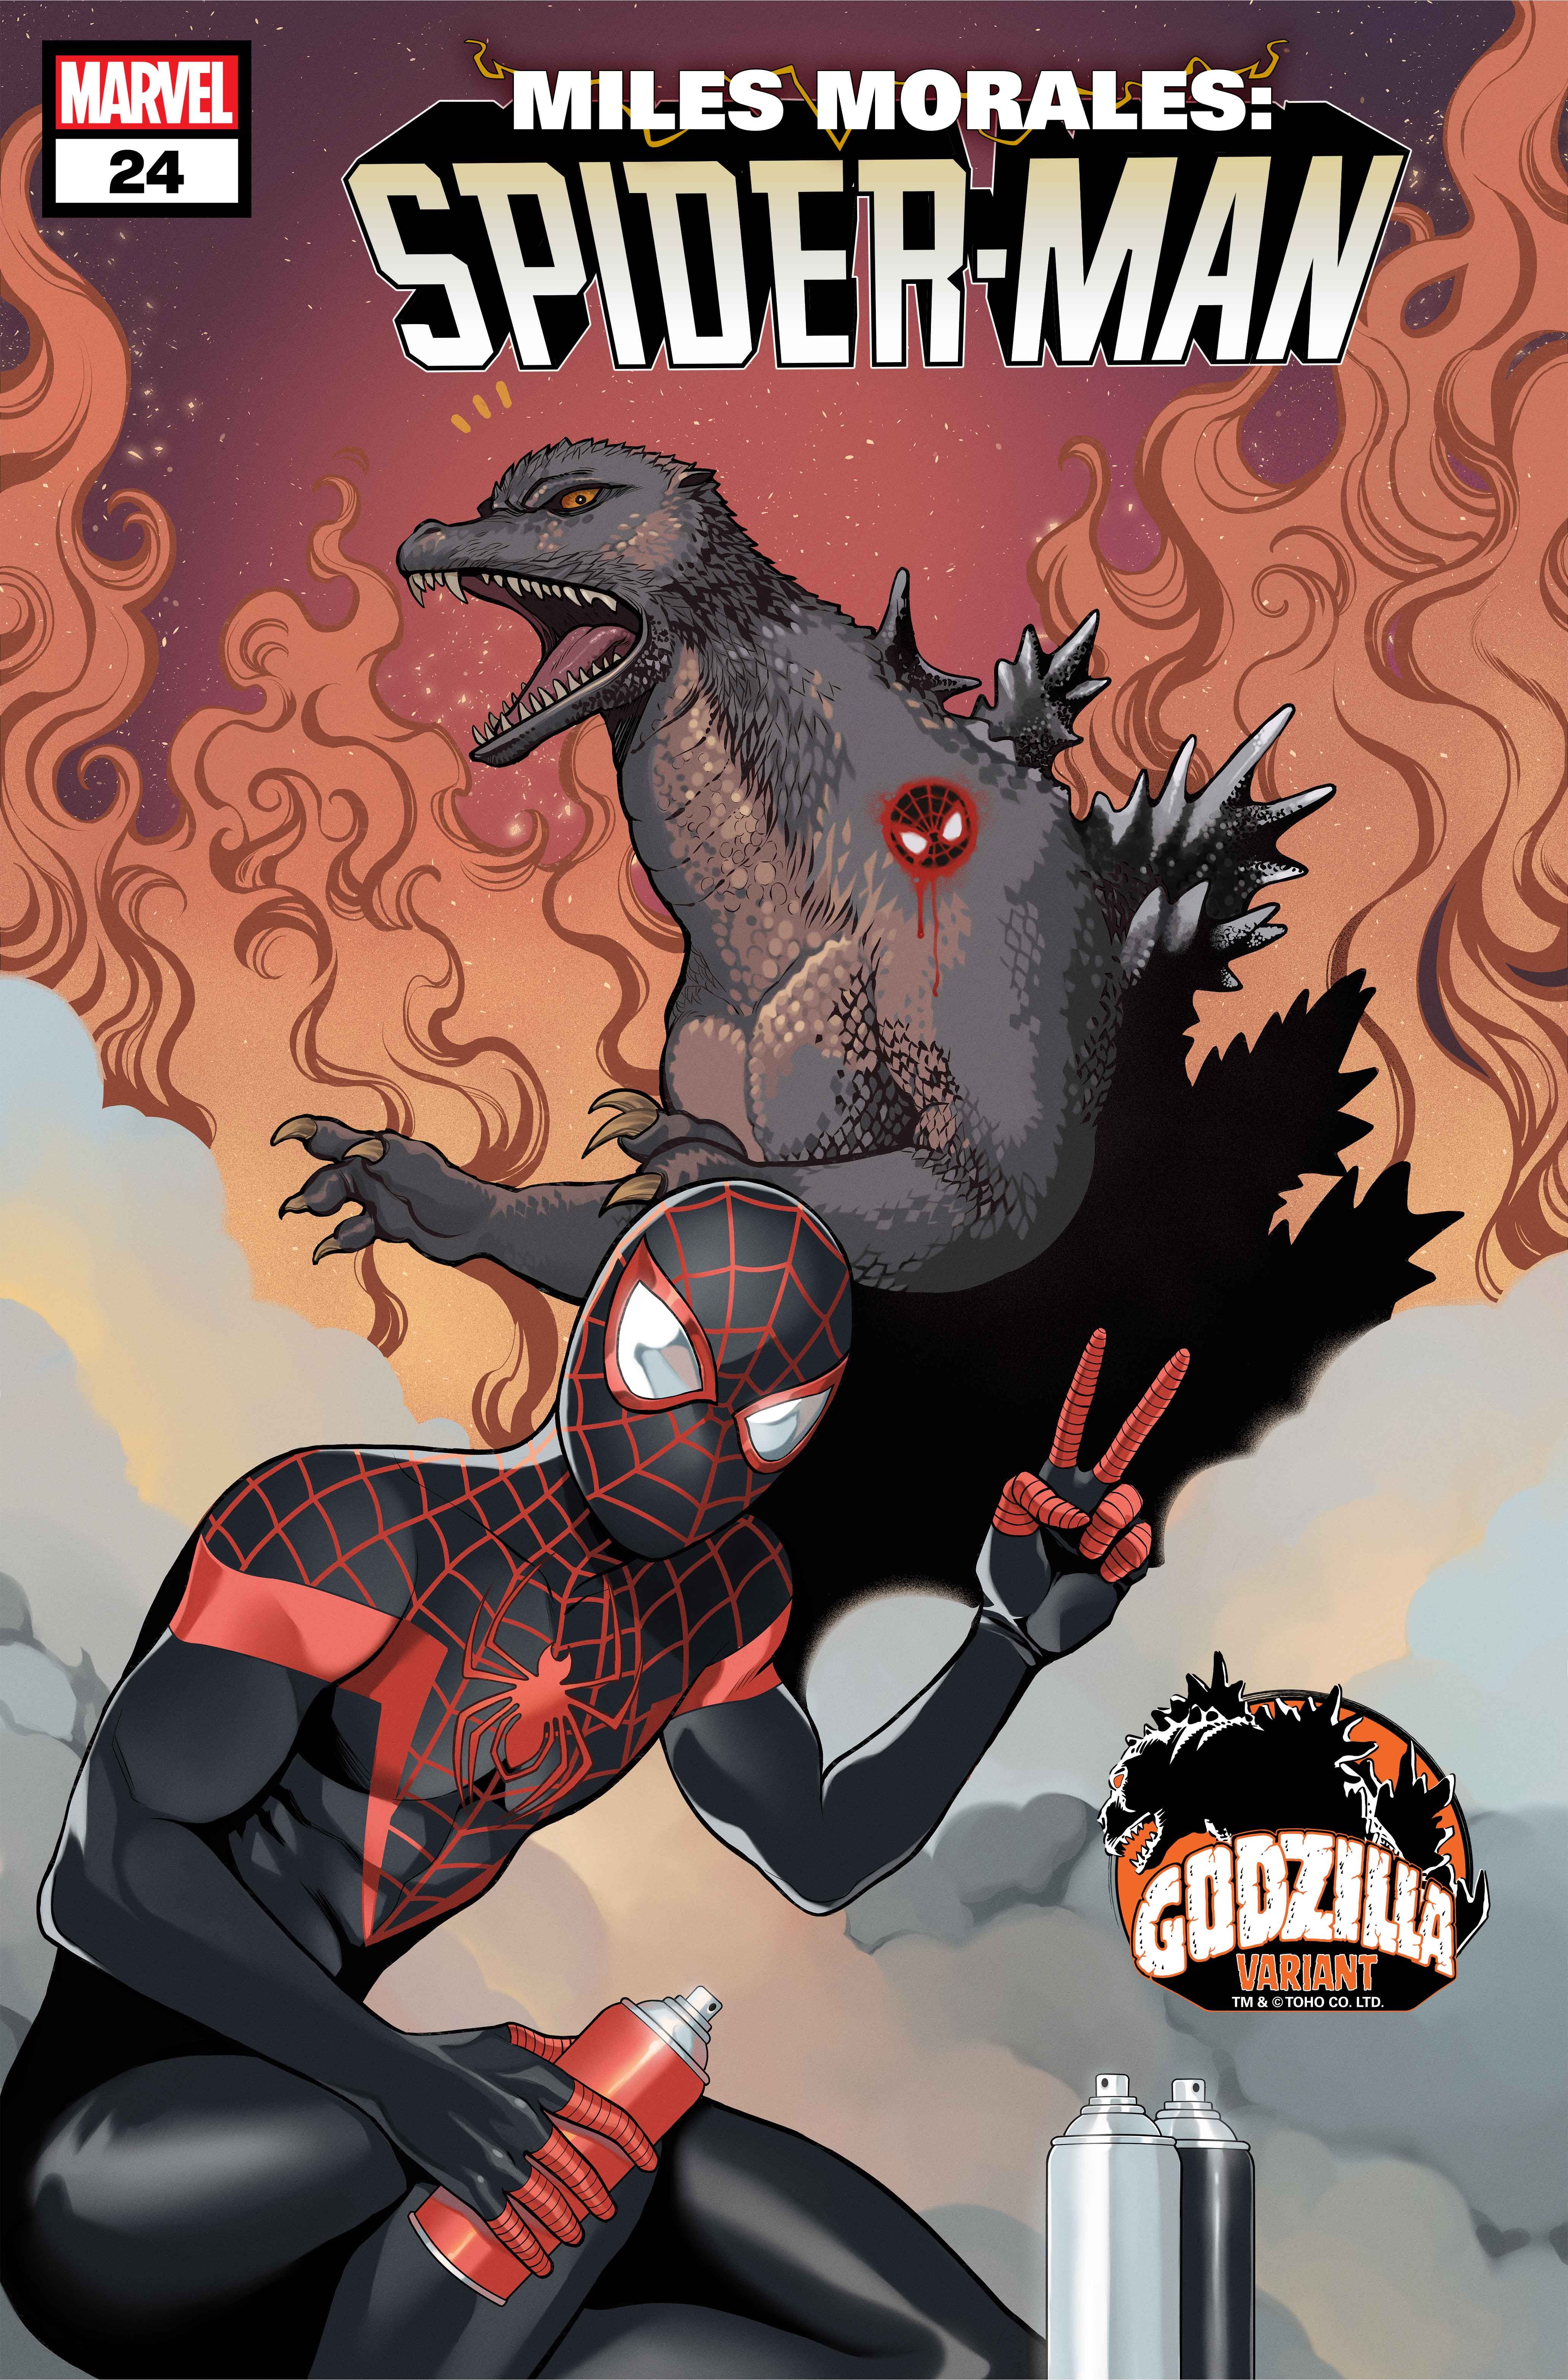 MILES MORALES: SPIDER-MAN #24 Godzilla Variant Cover by Romy Jones